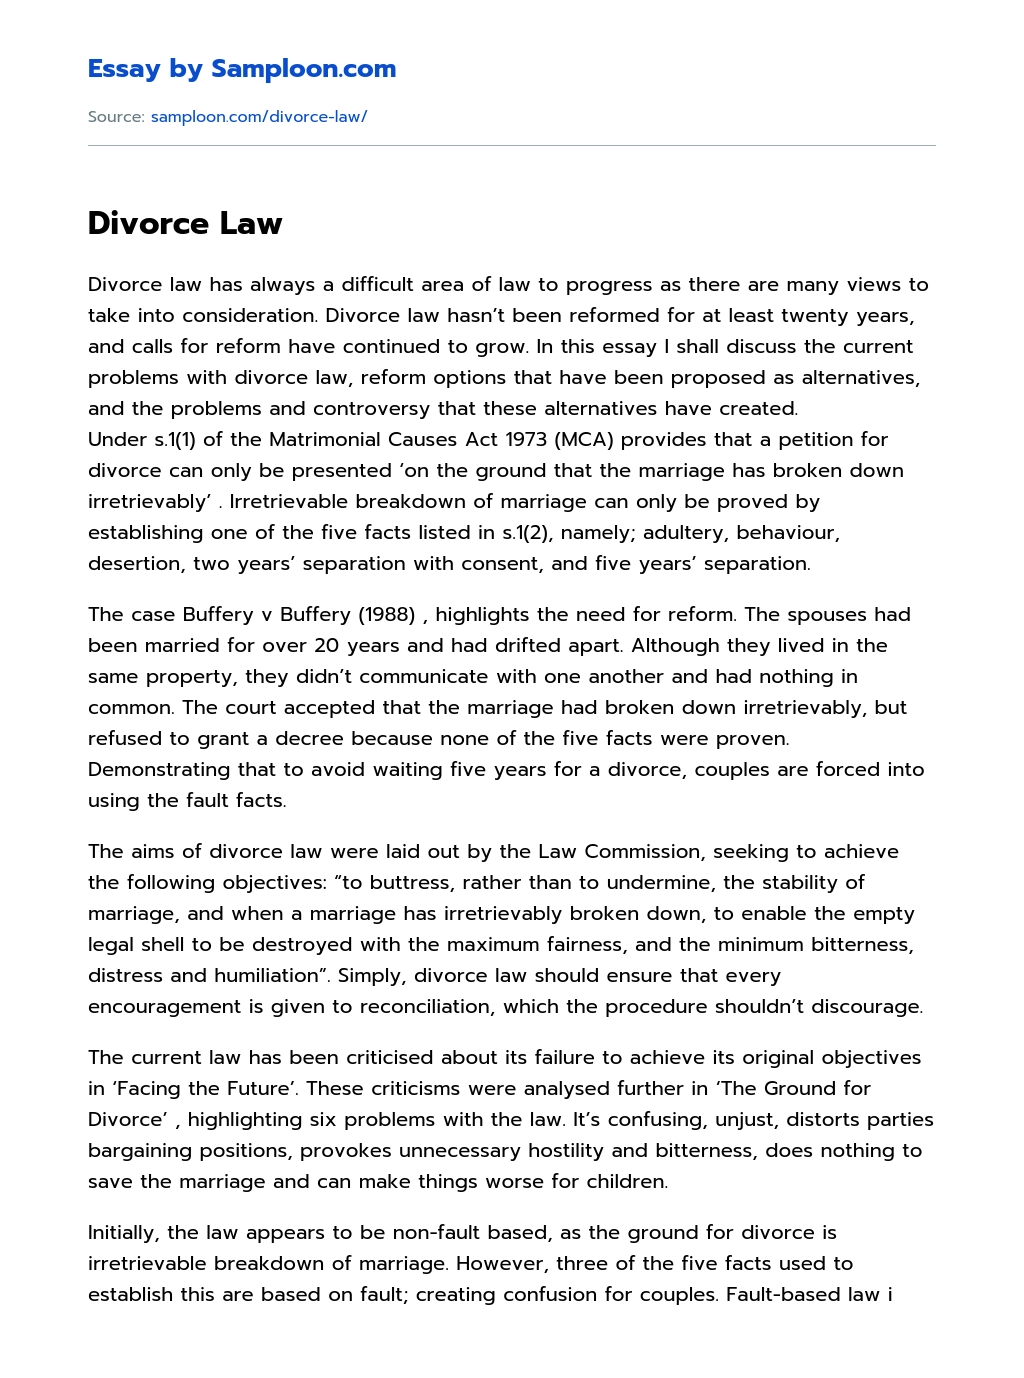 Divorce Law essay